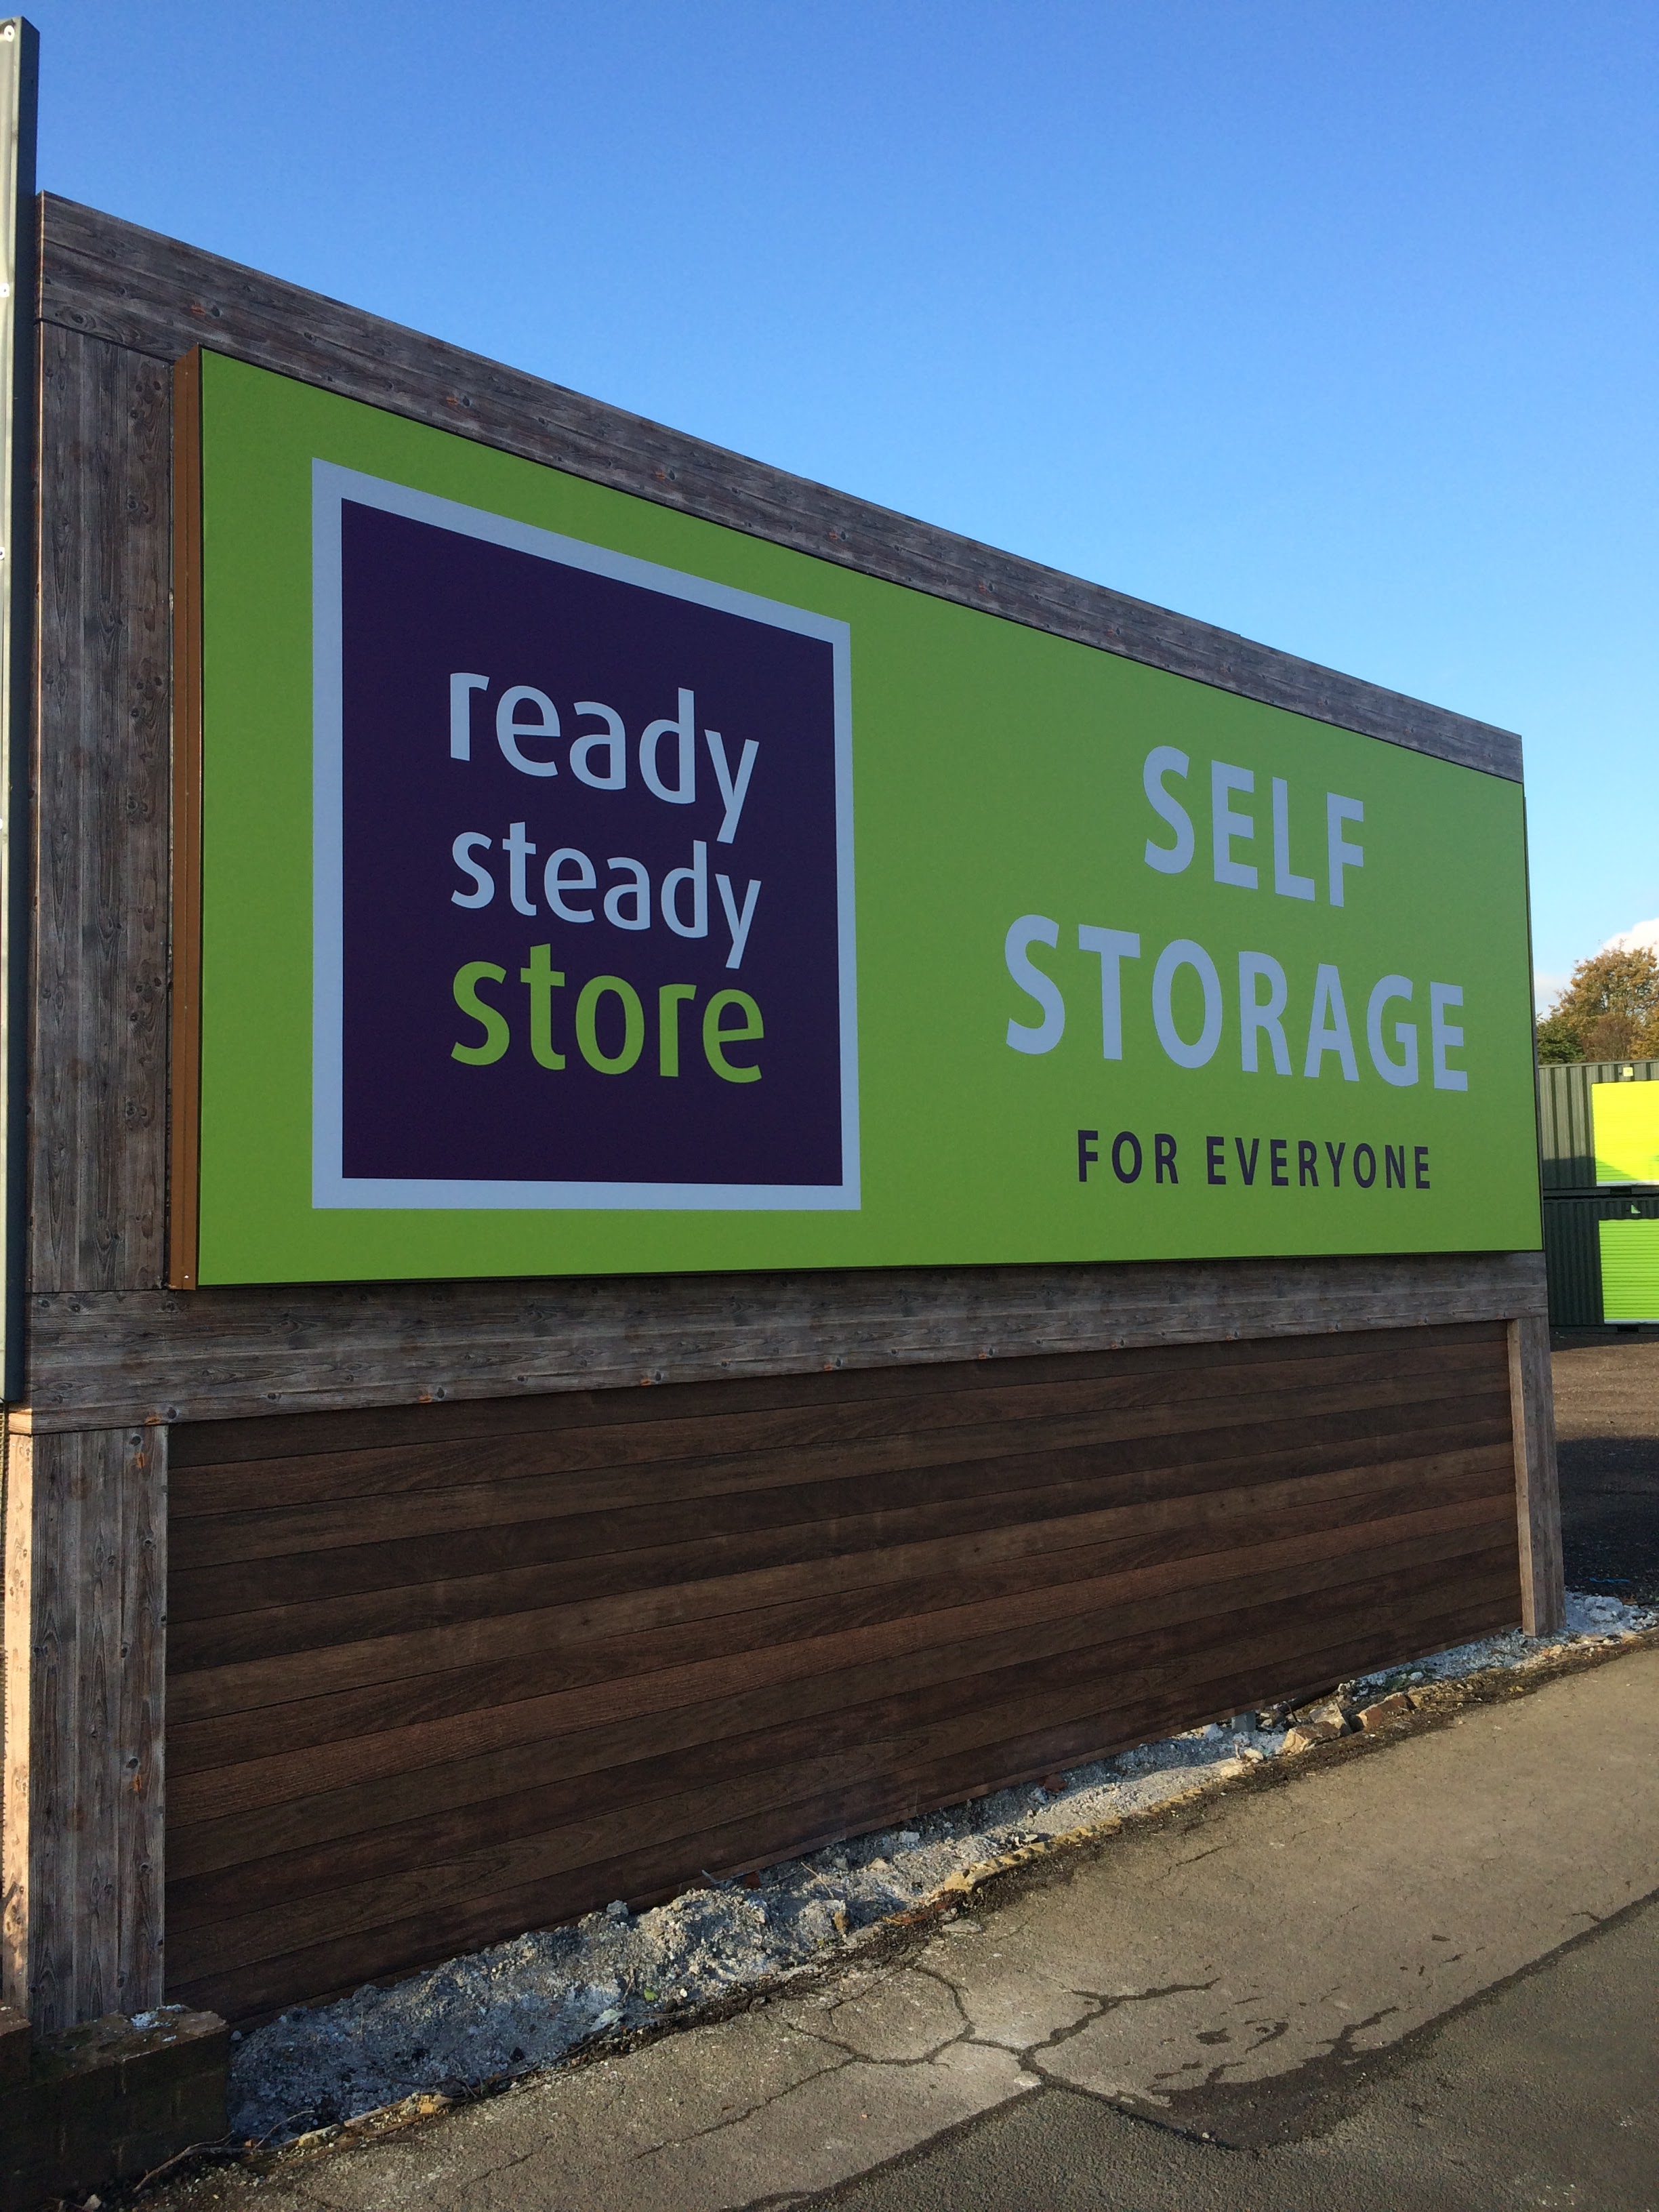 Ready Steady Store Self Storage Leeds Ring Road Leeds 01132 244830